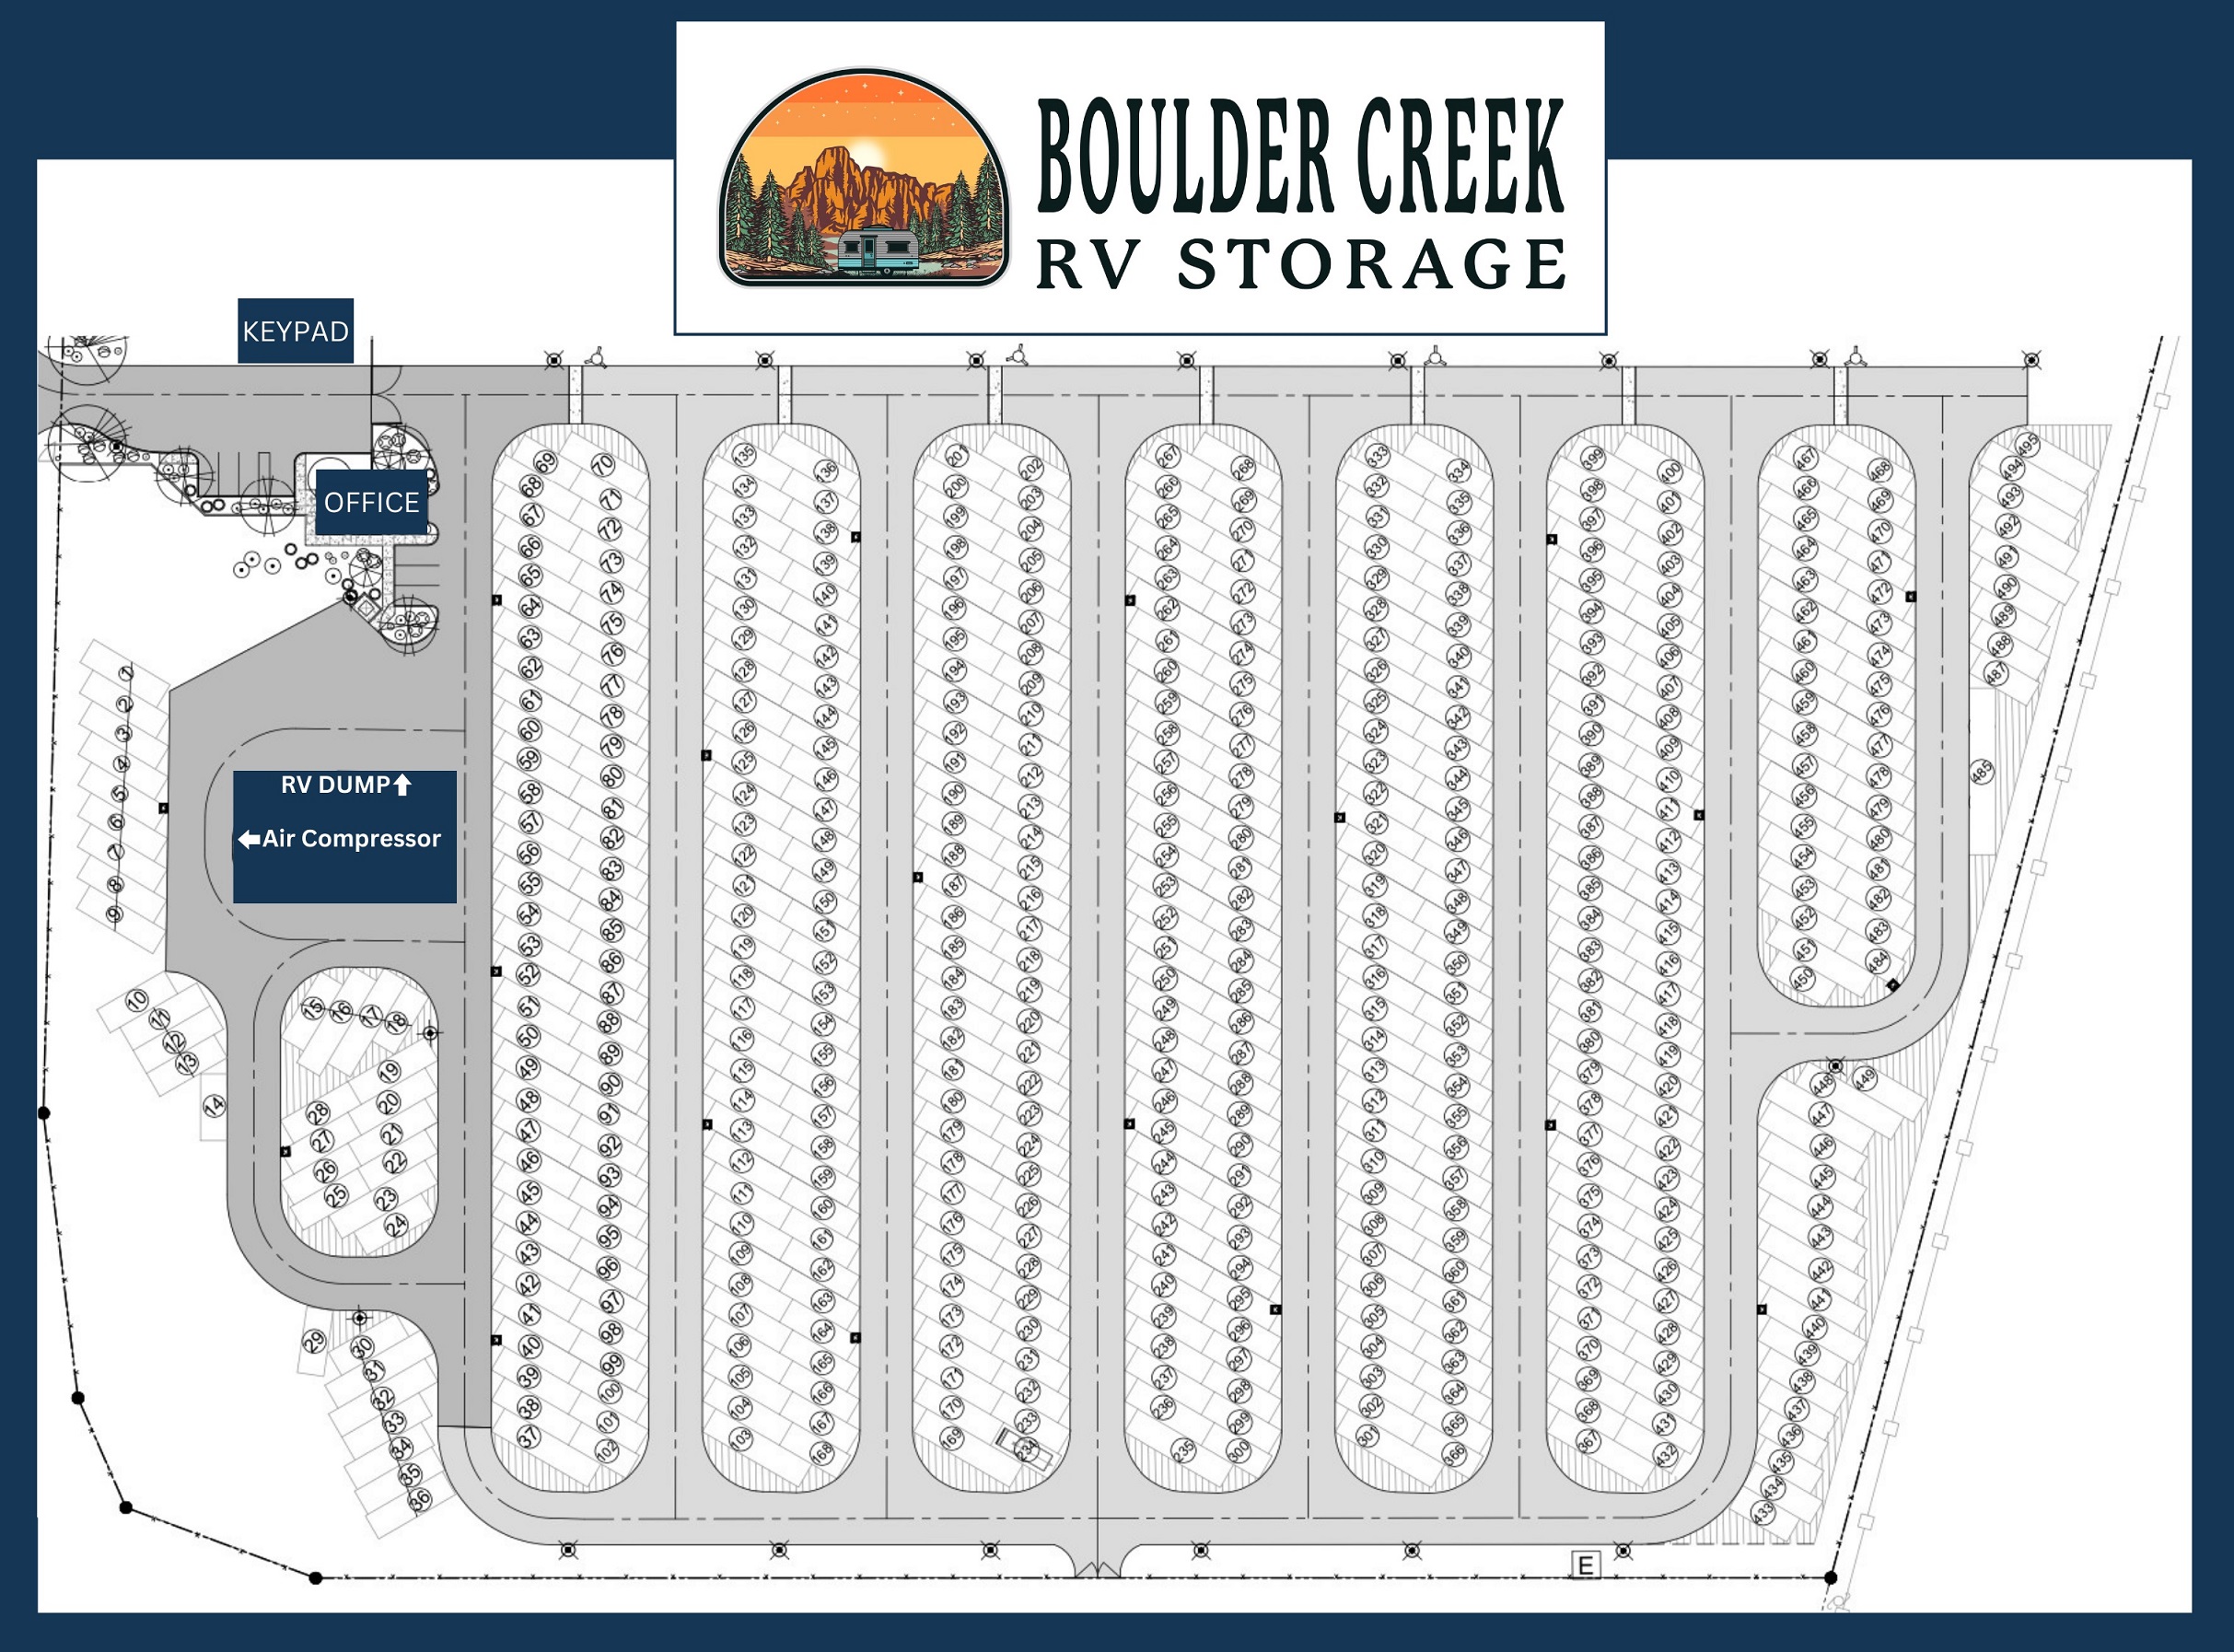 Boulder Creek RV Storage, Camp Verde, AZ 86322, Map of our sites